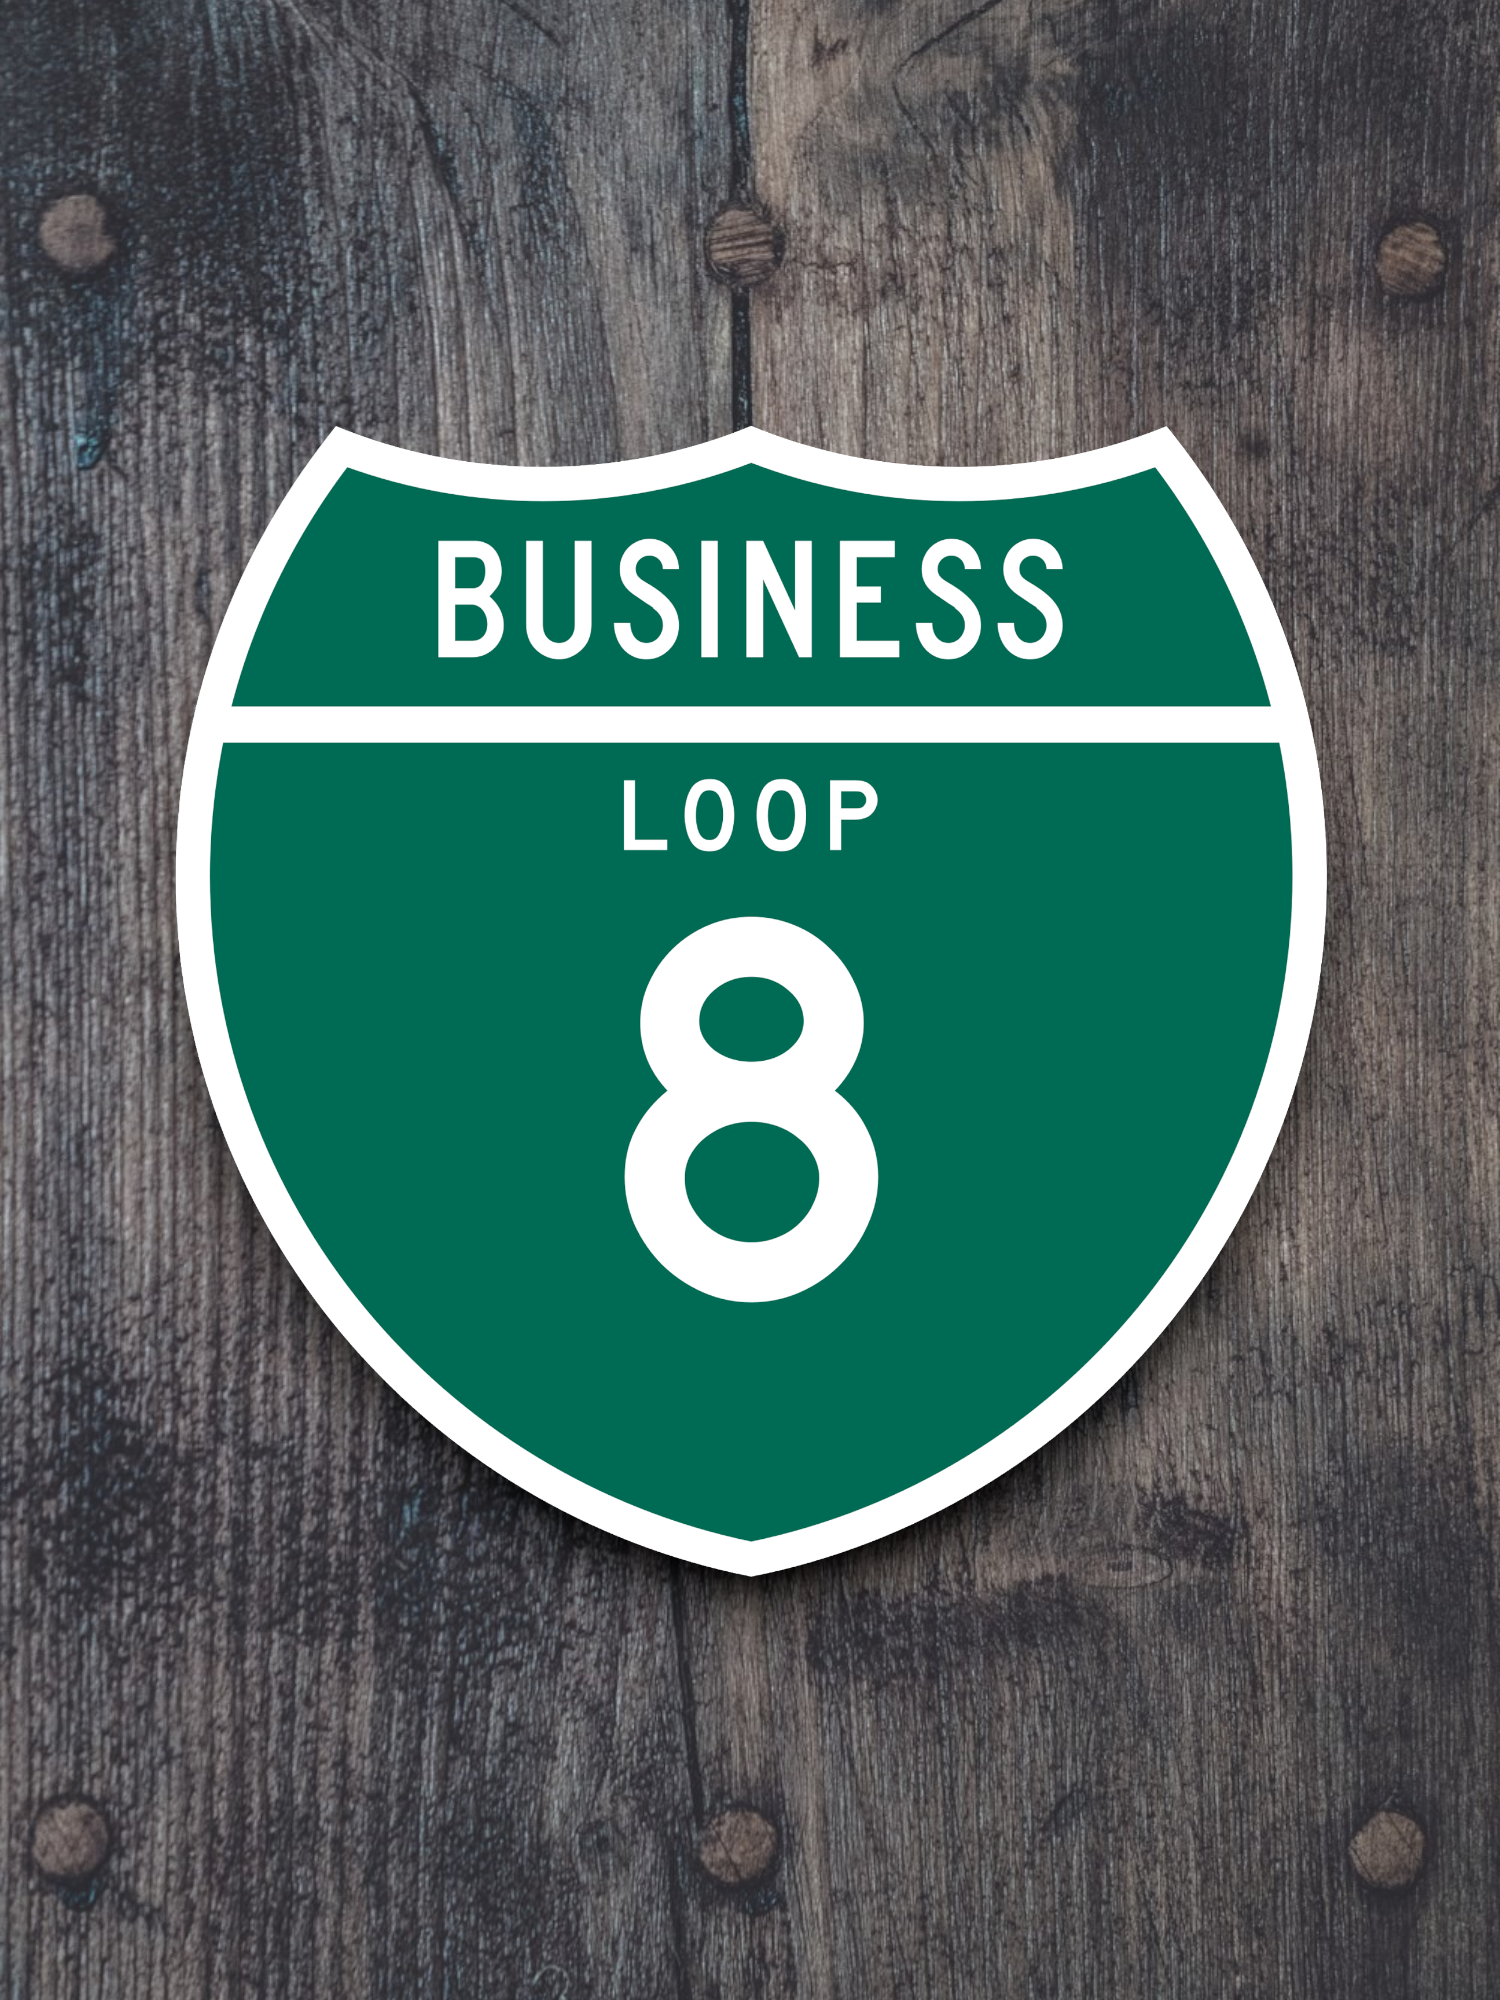 Business Loop Interstate 8 California Sticker